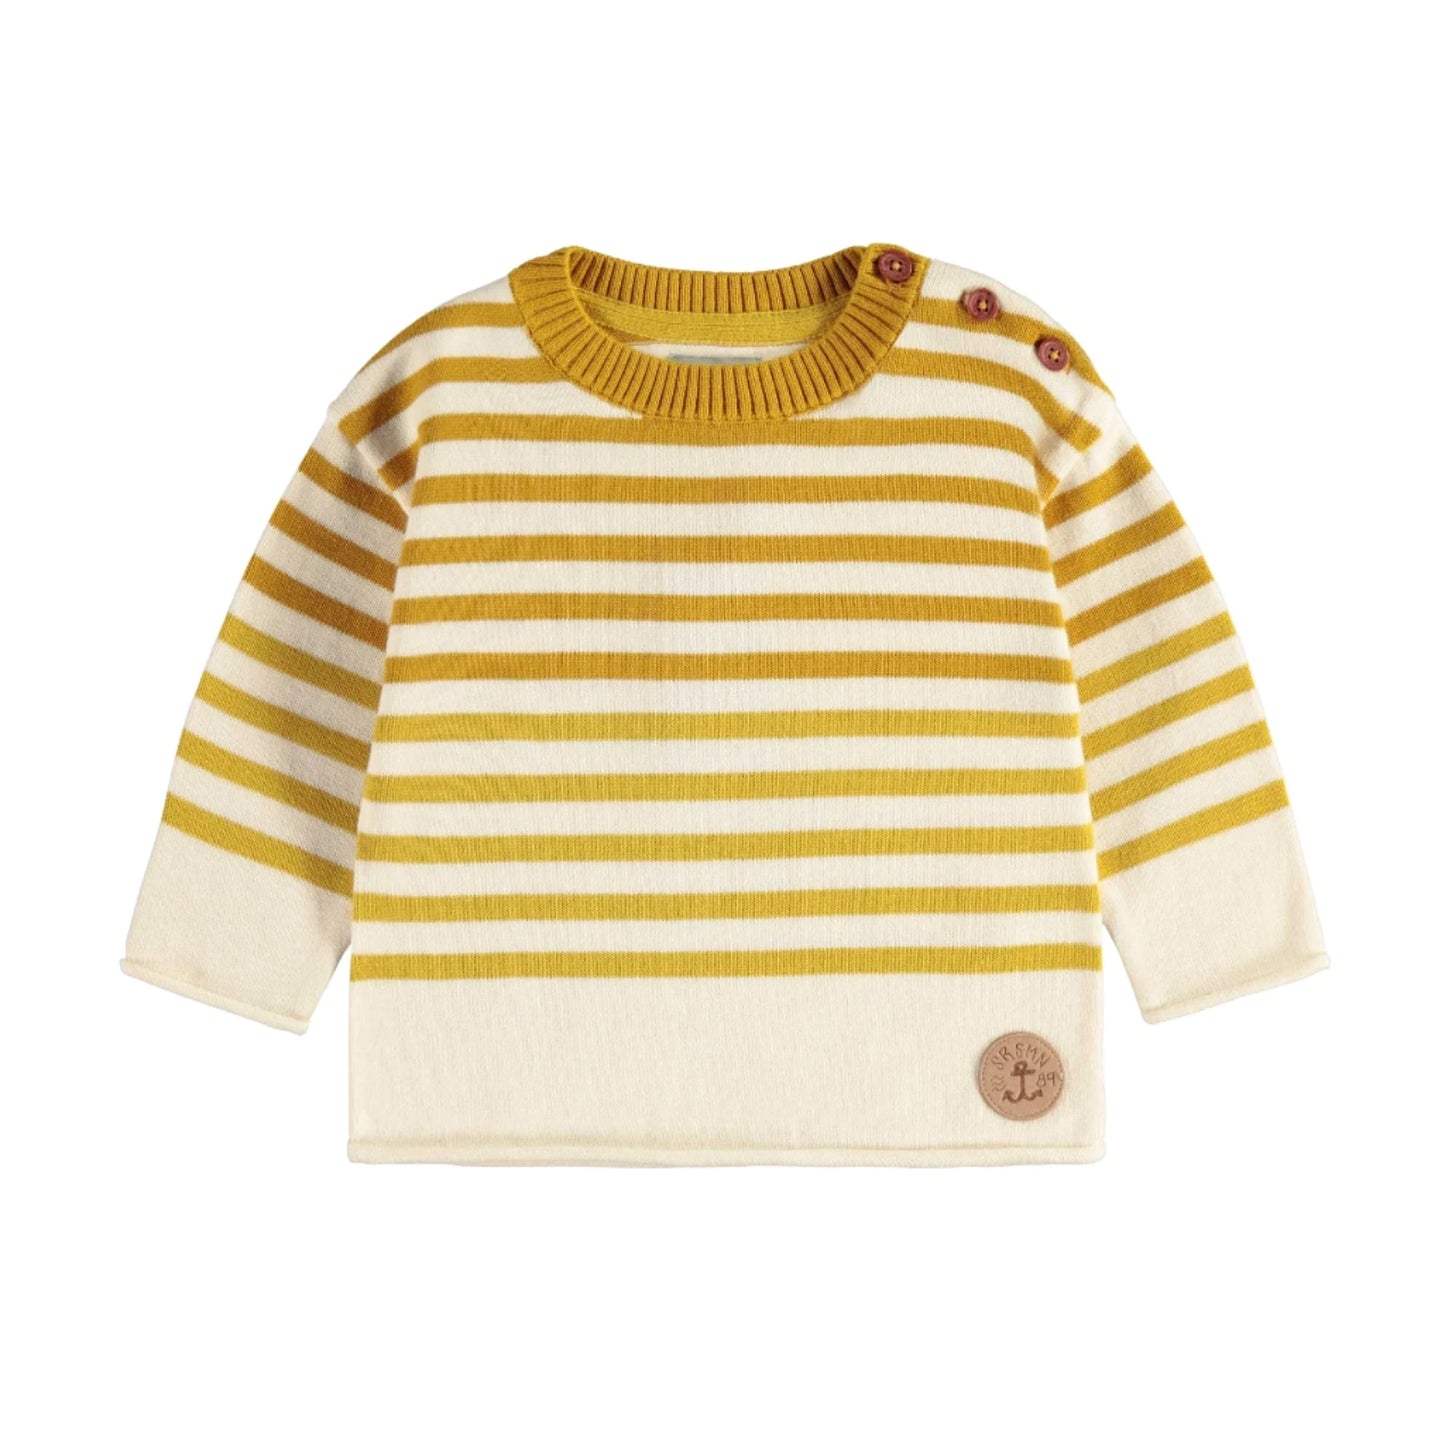 Knit Baby Sweatshirt - Yellow Stripes